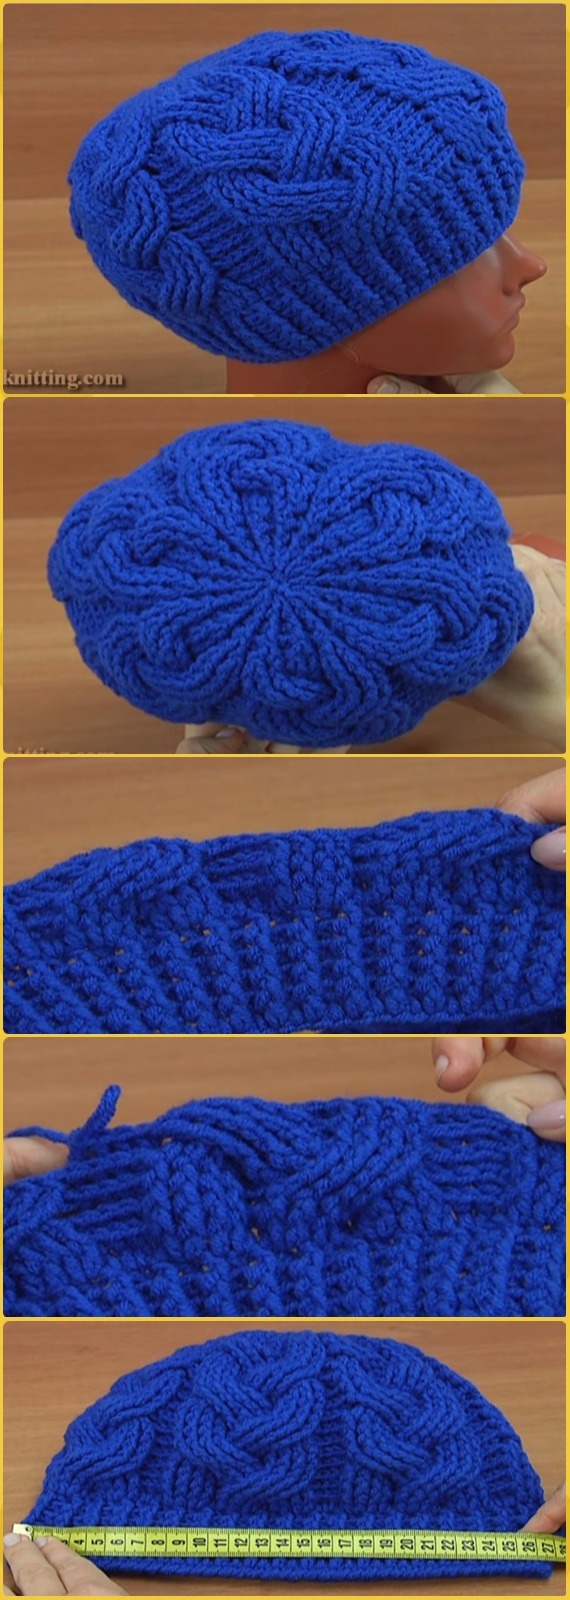 Crochet Braid Cable Stitch Hat Free Pattern Video - Crochet Cable Hat Free Patterns